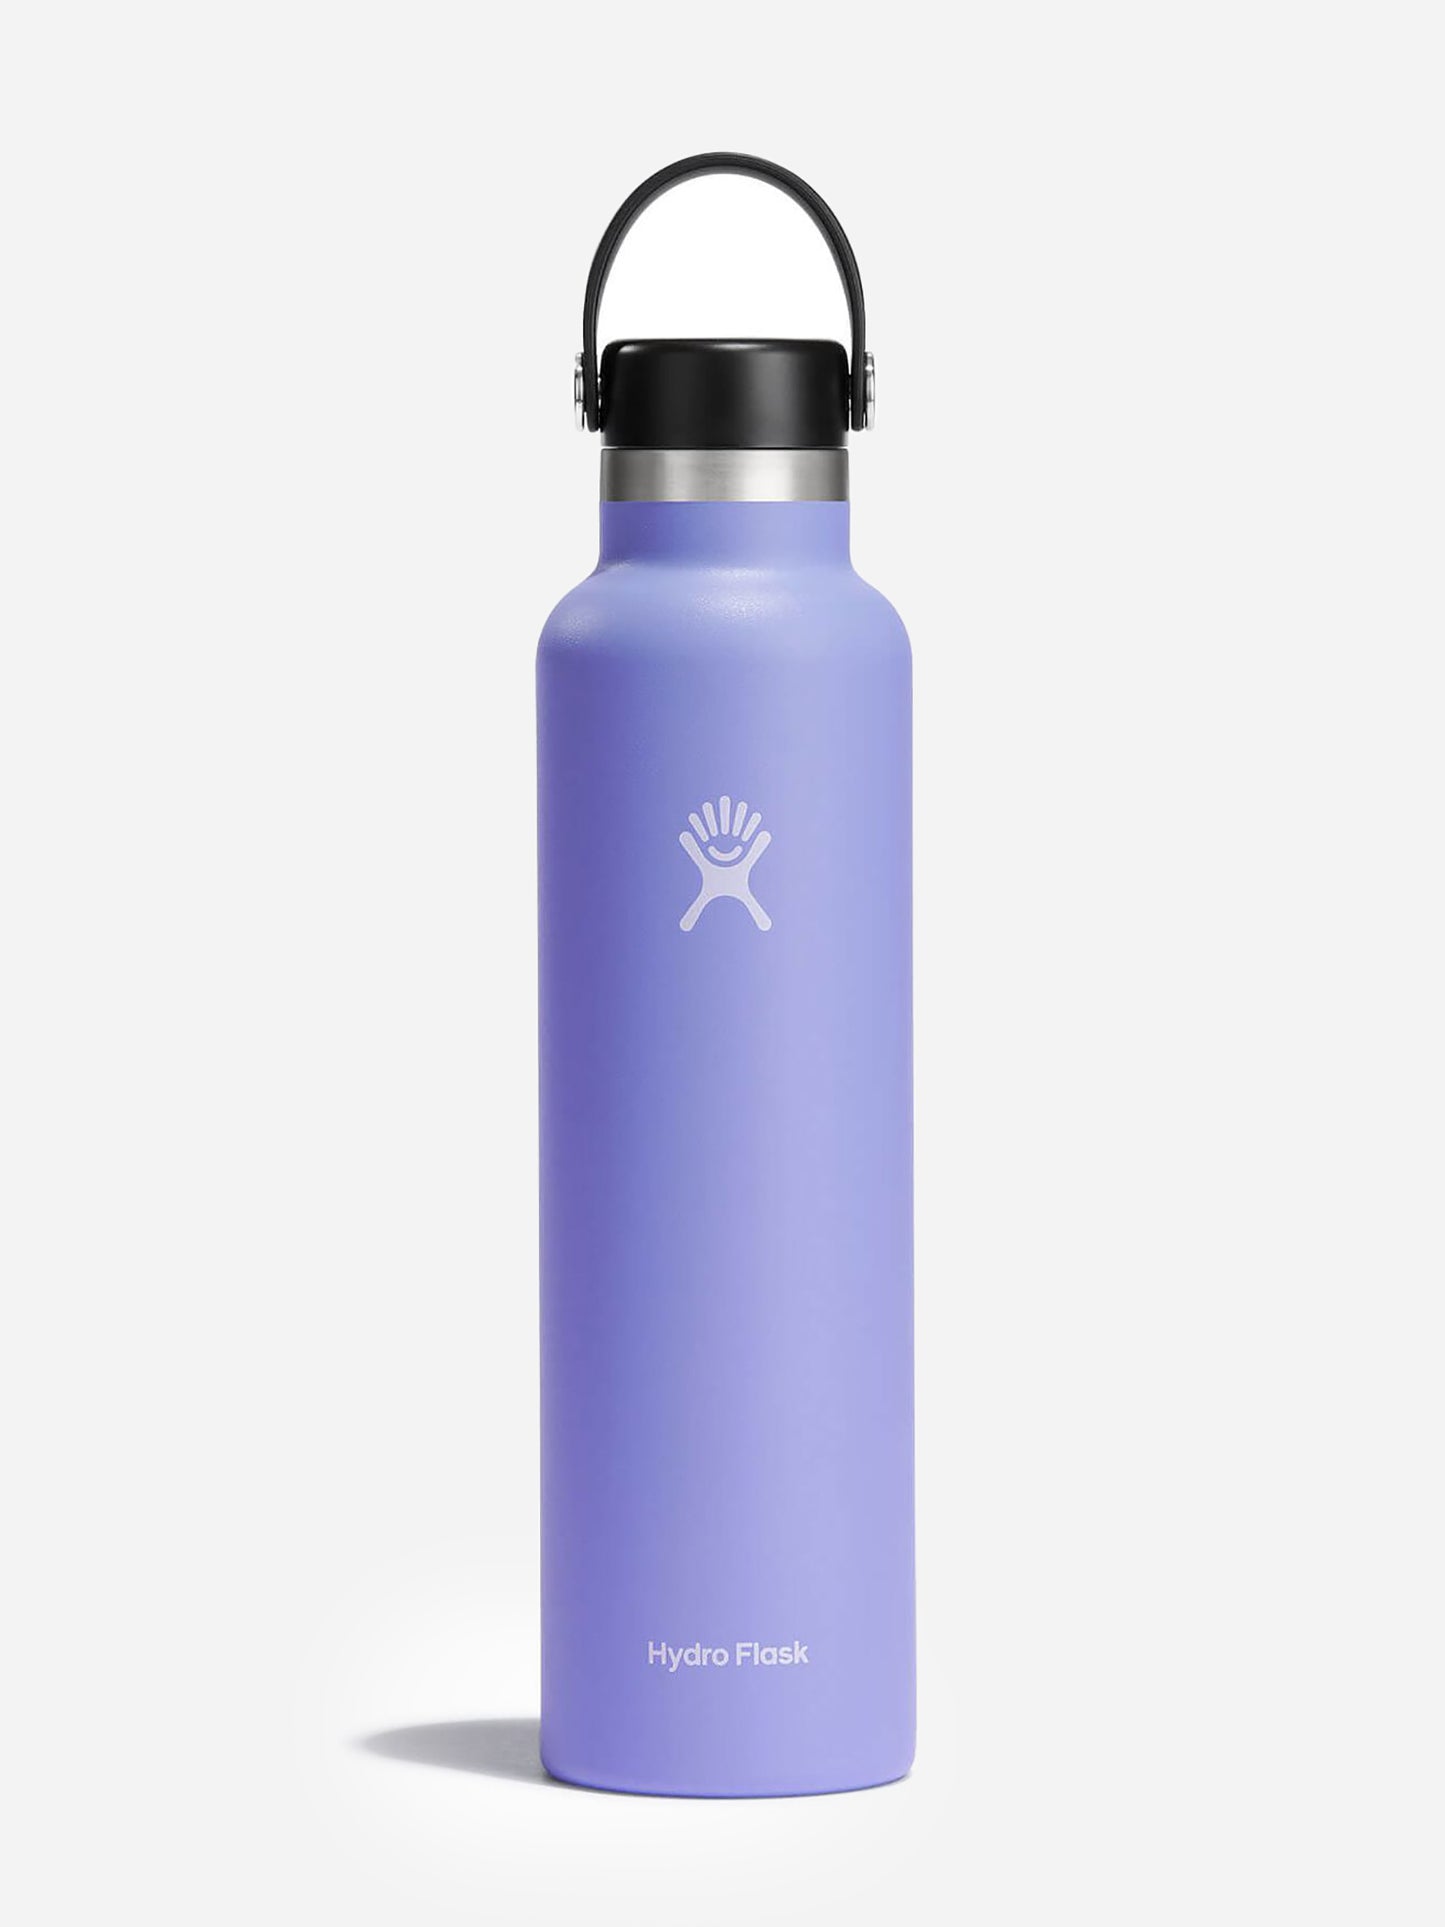 Hydroflask Standard Mouth 24oz Water Bottle